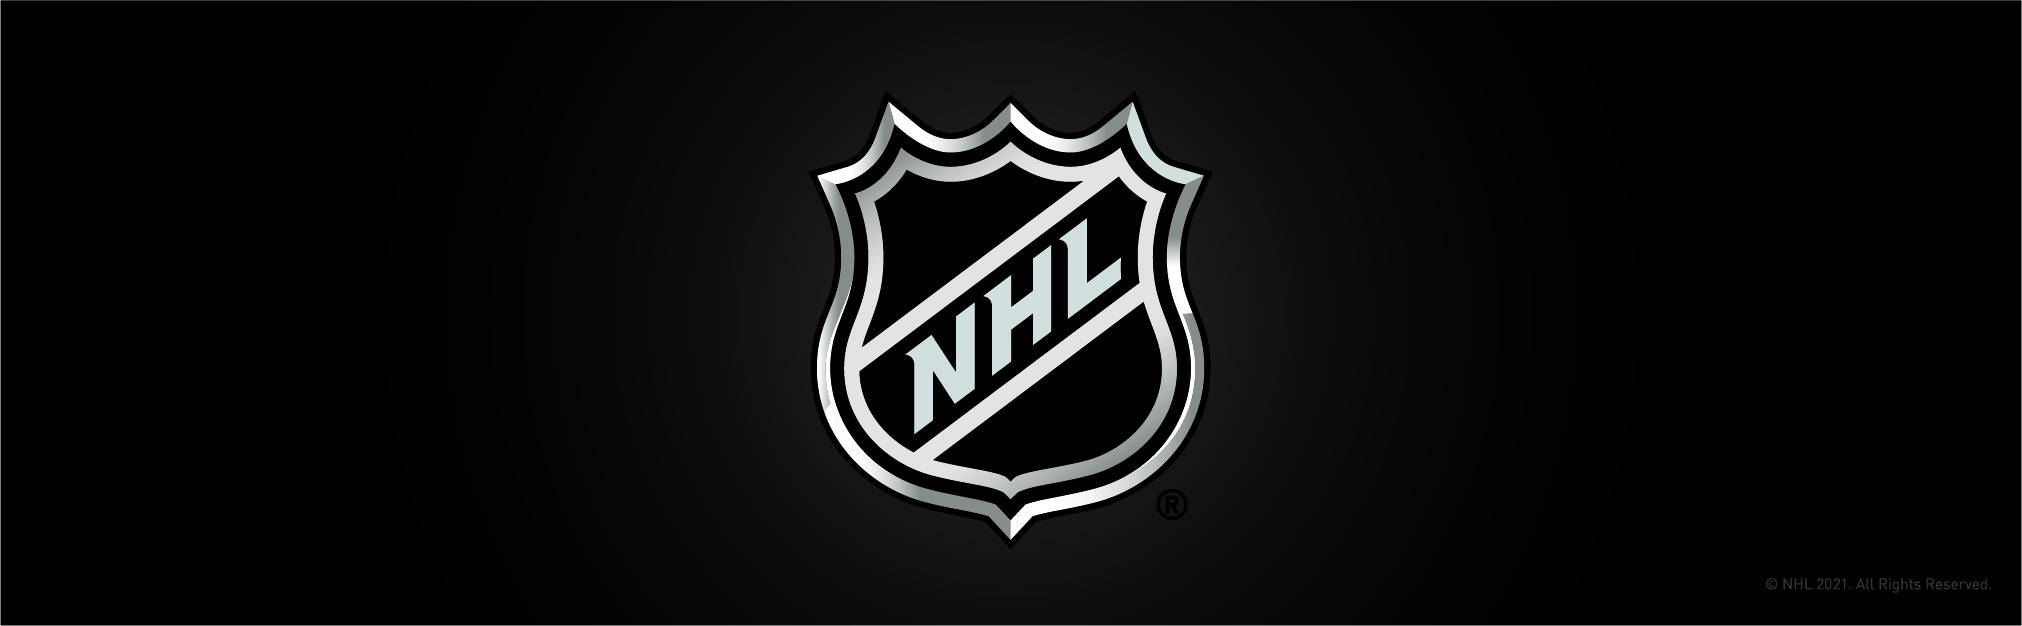 NHL logo banner